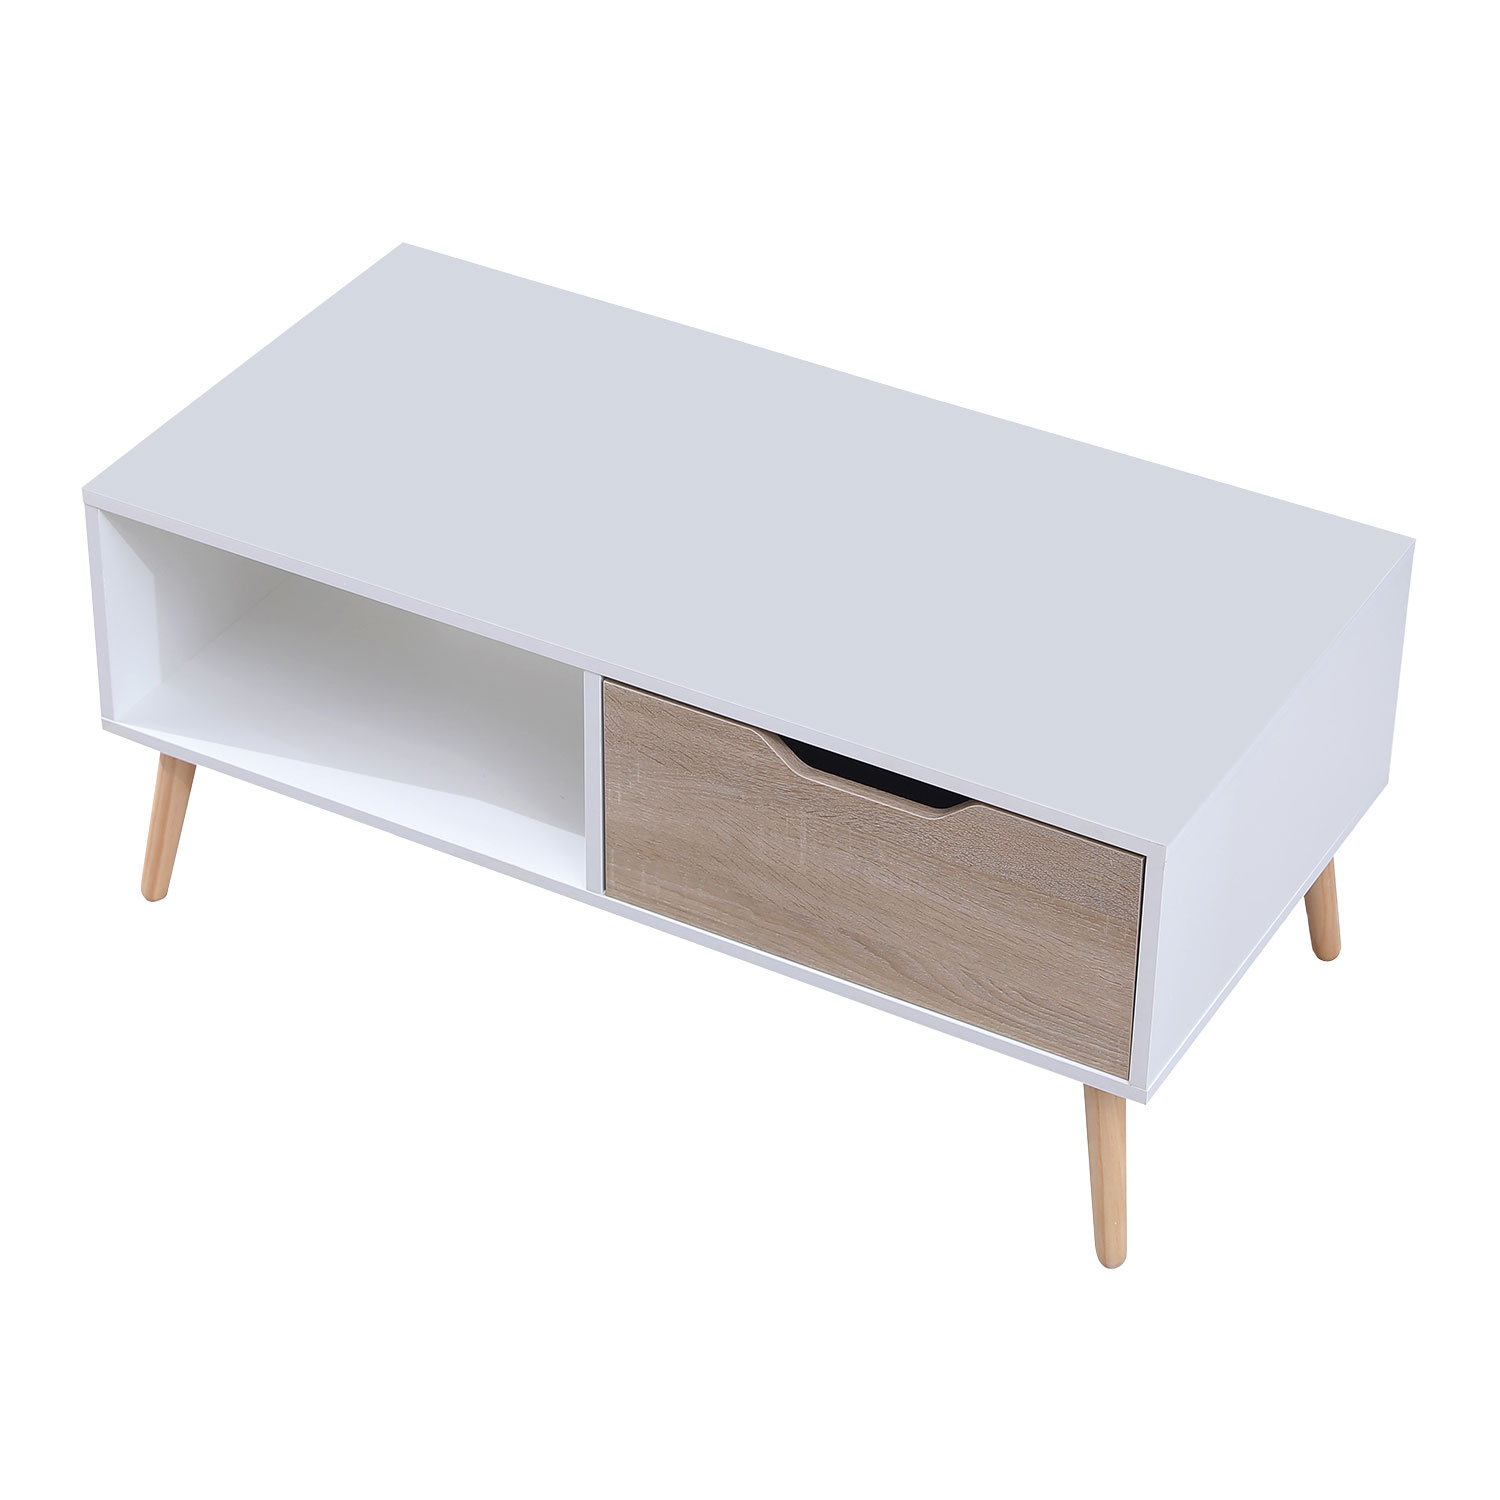 FREJA mesa baja blanca de estilo escandinavo con cajón